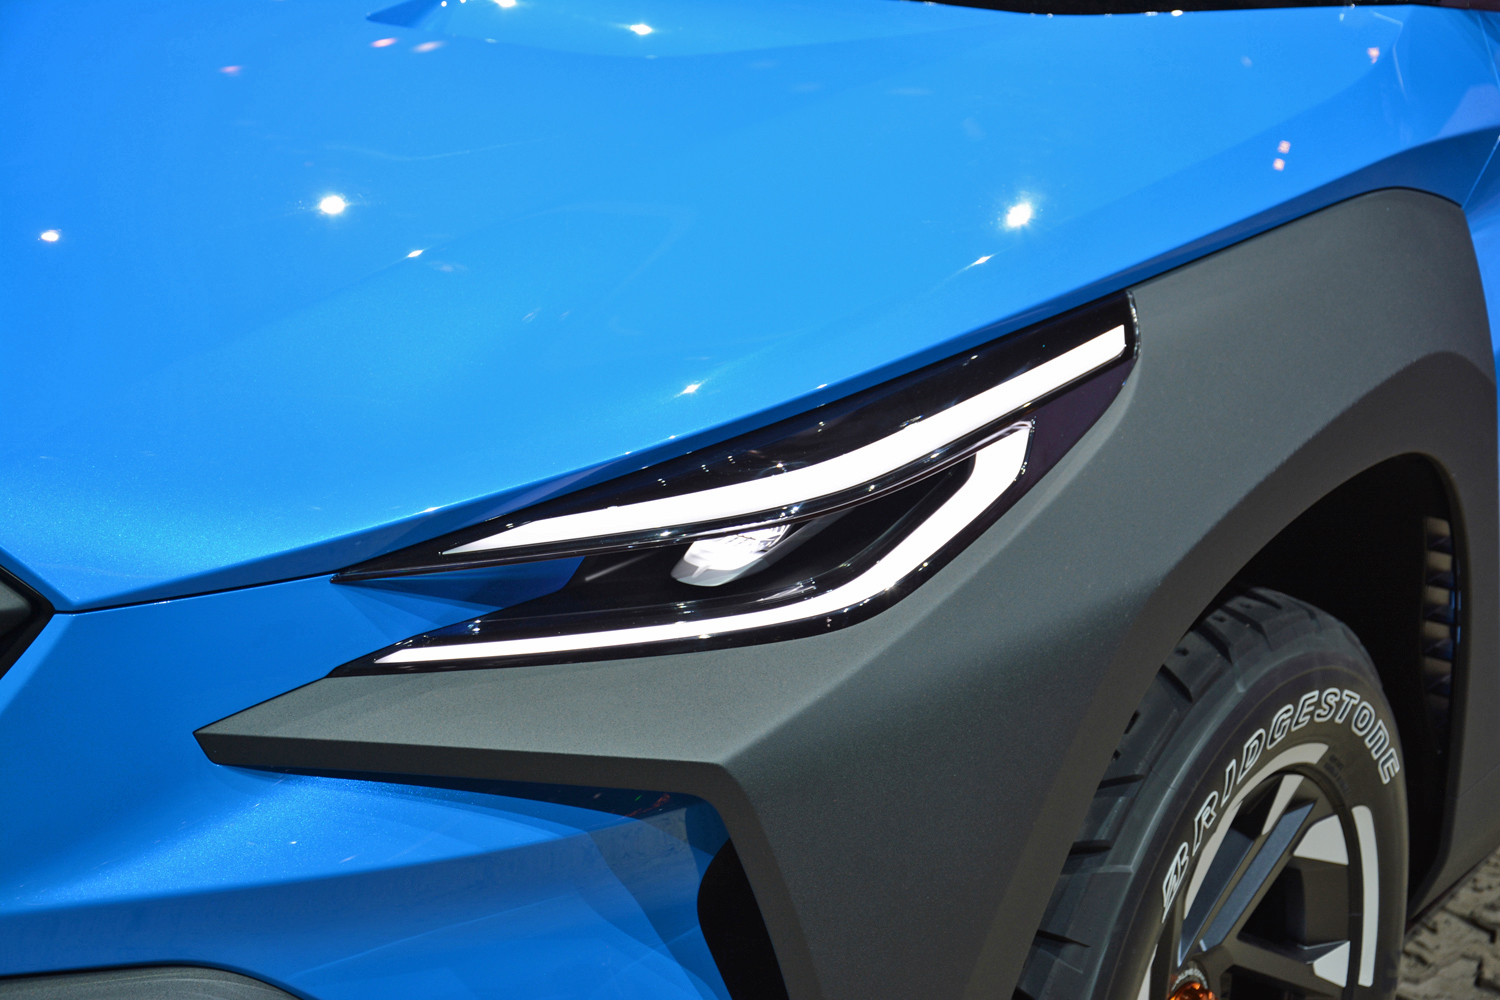 2019 Subaru Viziv concept